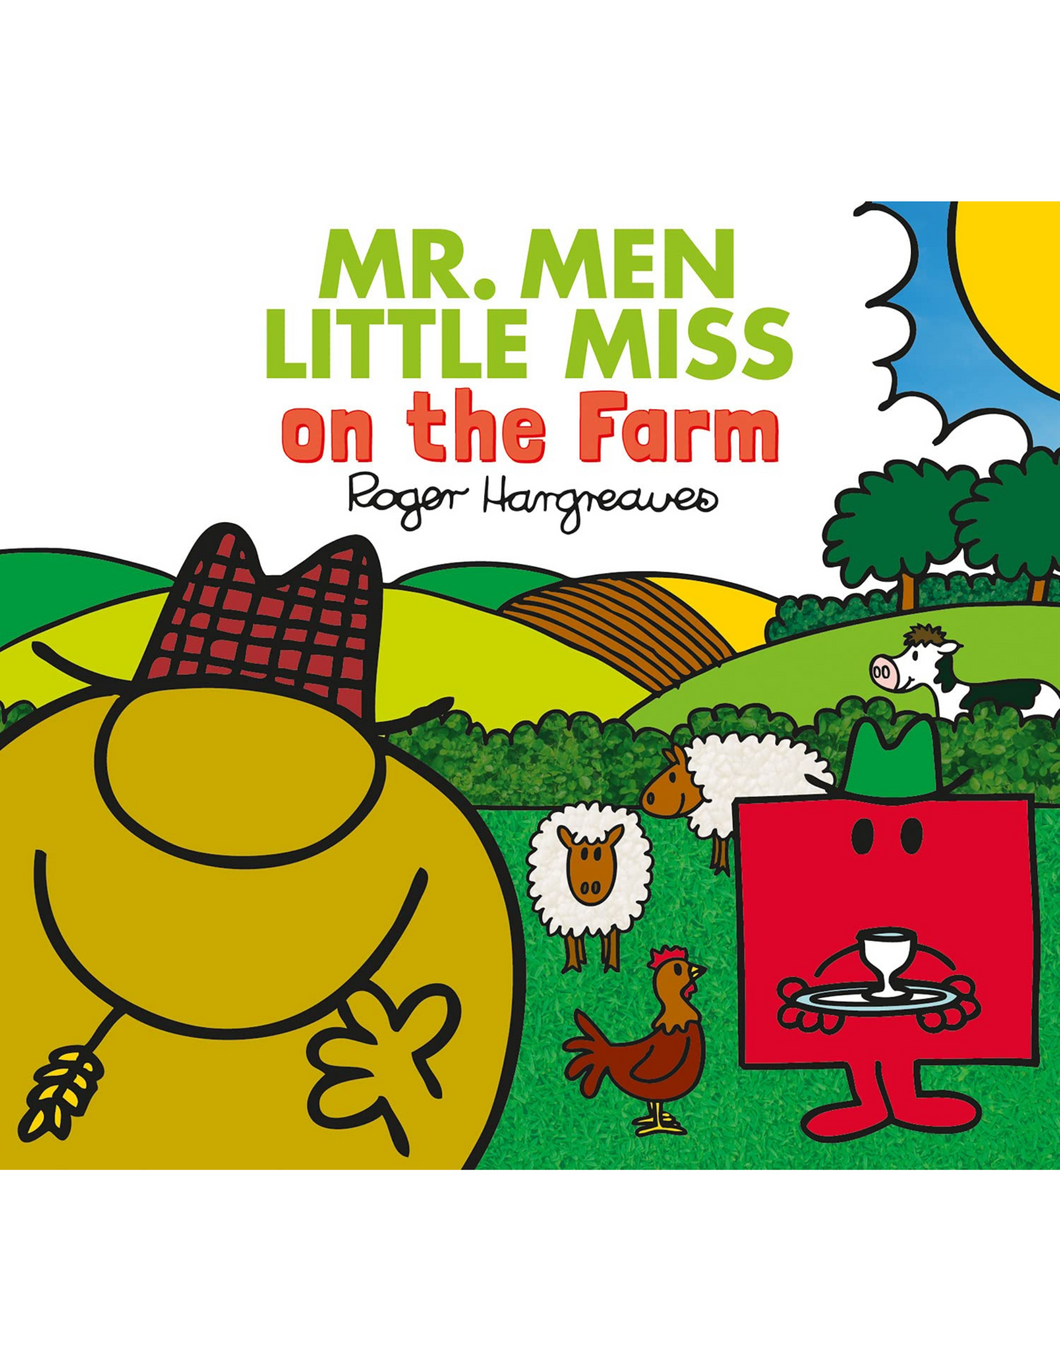 Mr. Men and the Farm